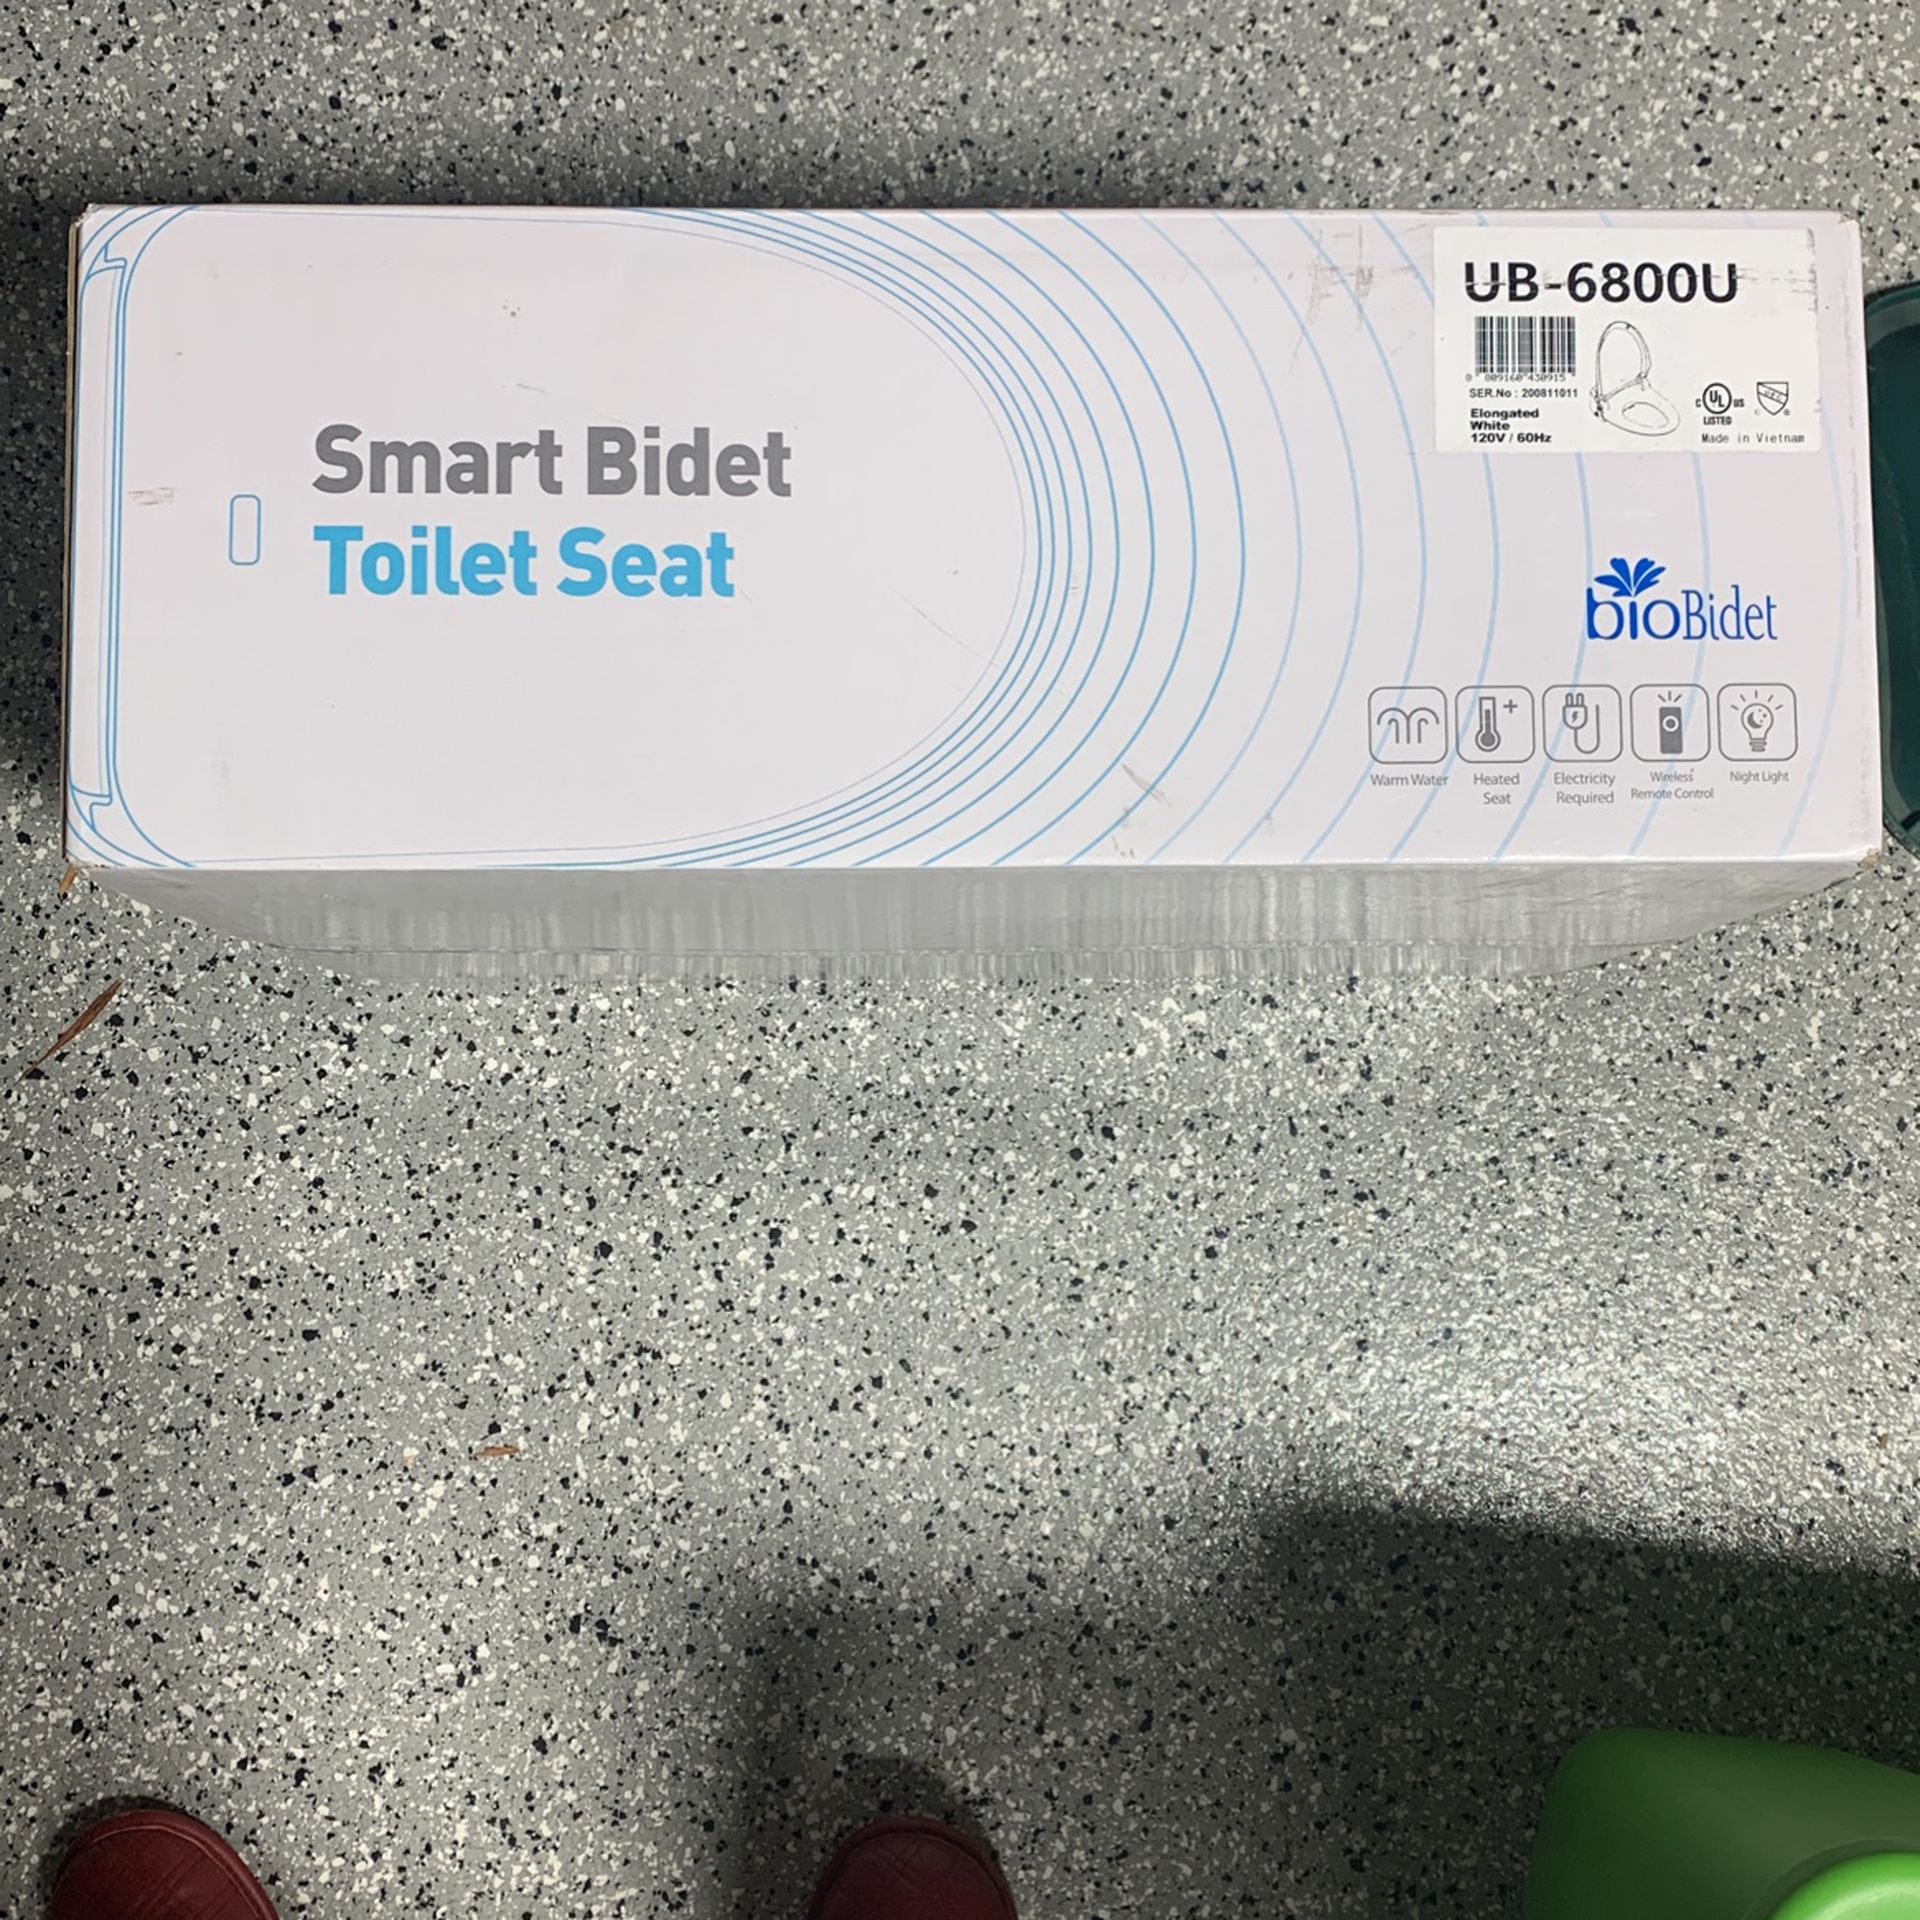 Smart Bidet toilet seat